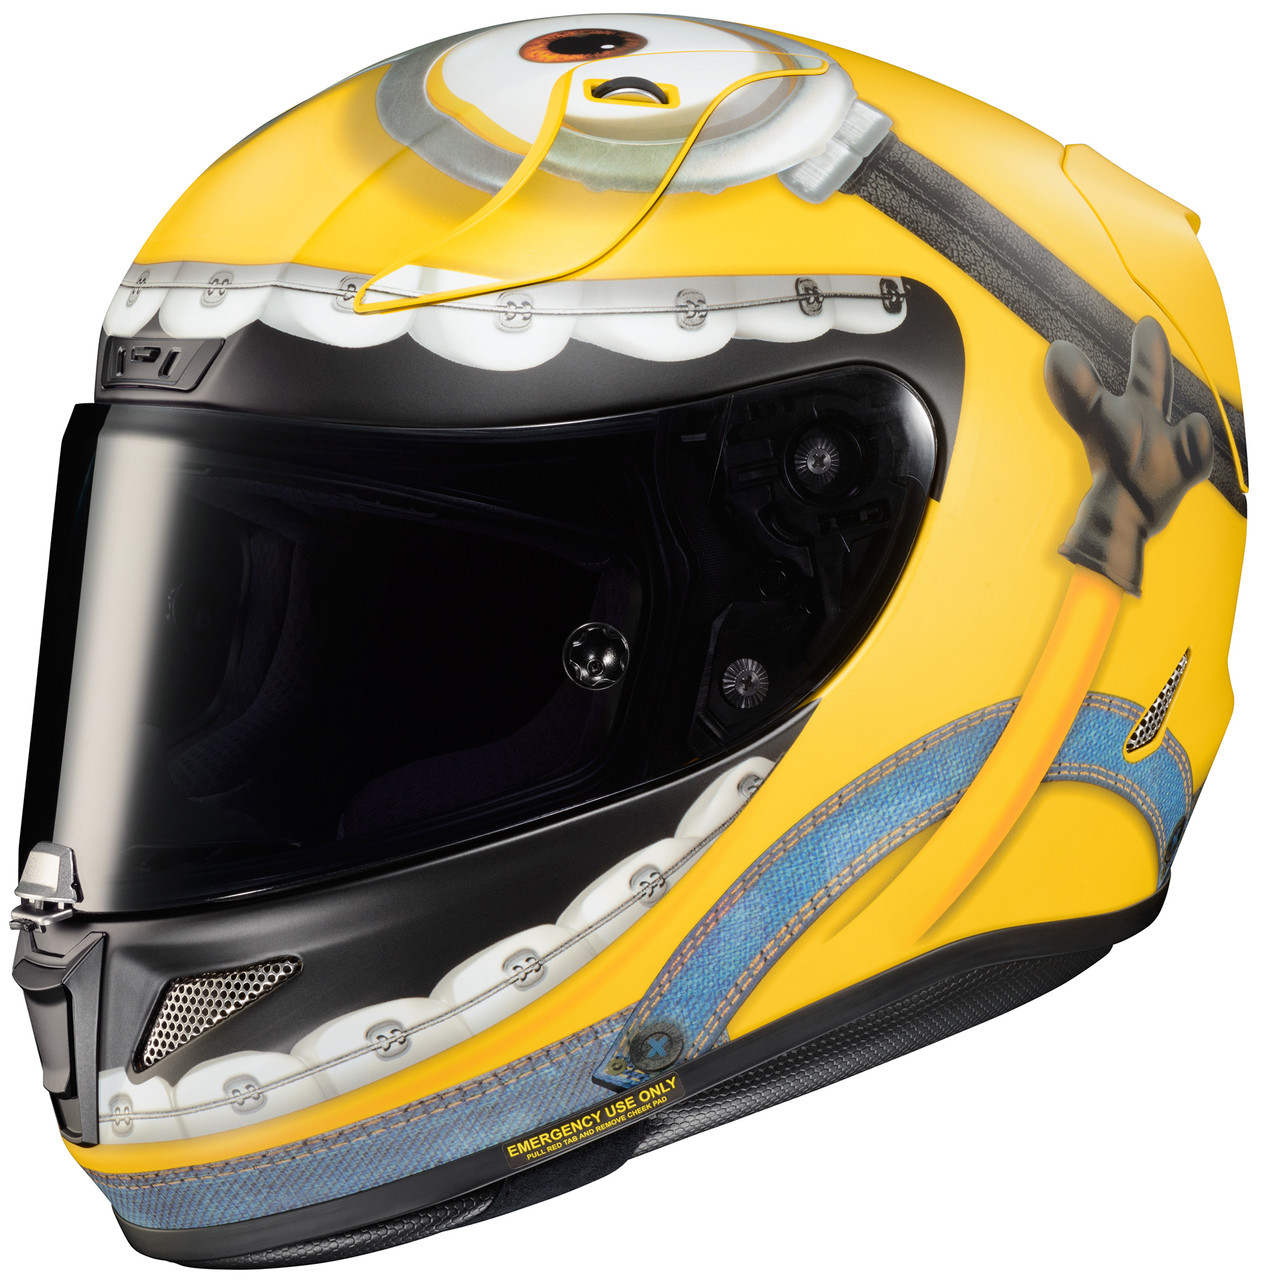 HJC RPHA 11 Pro Seeze Full Face Motorcycle Helmet